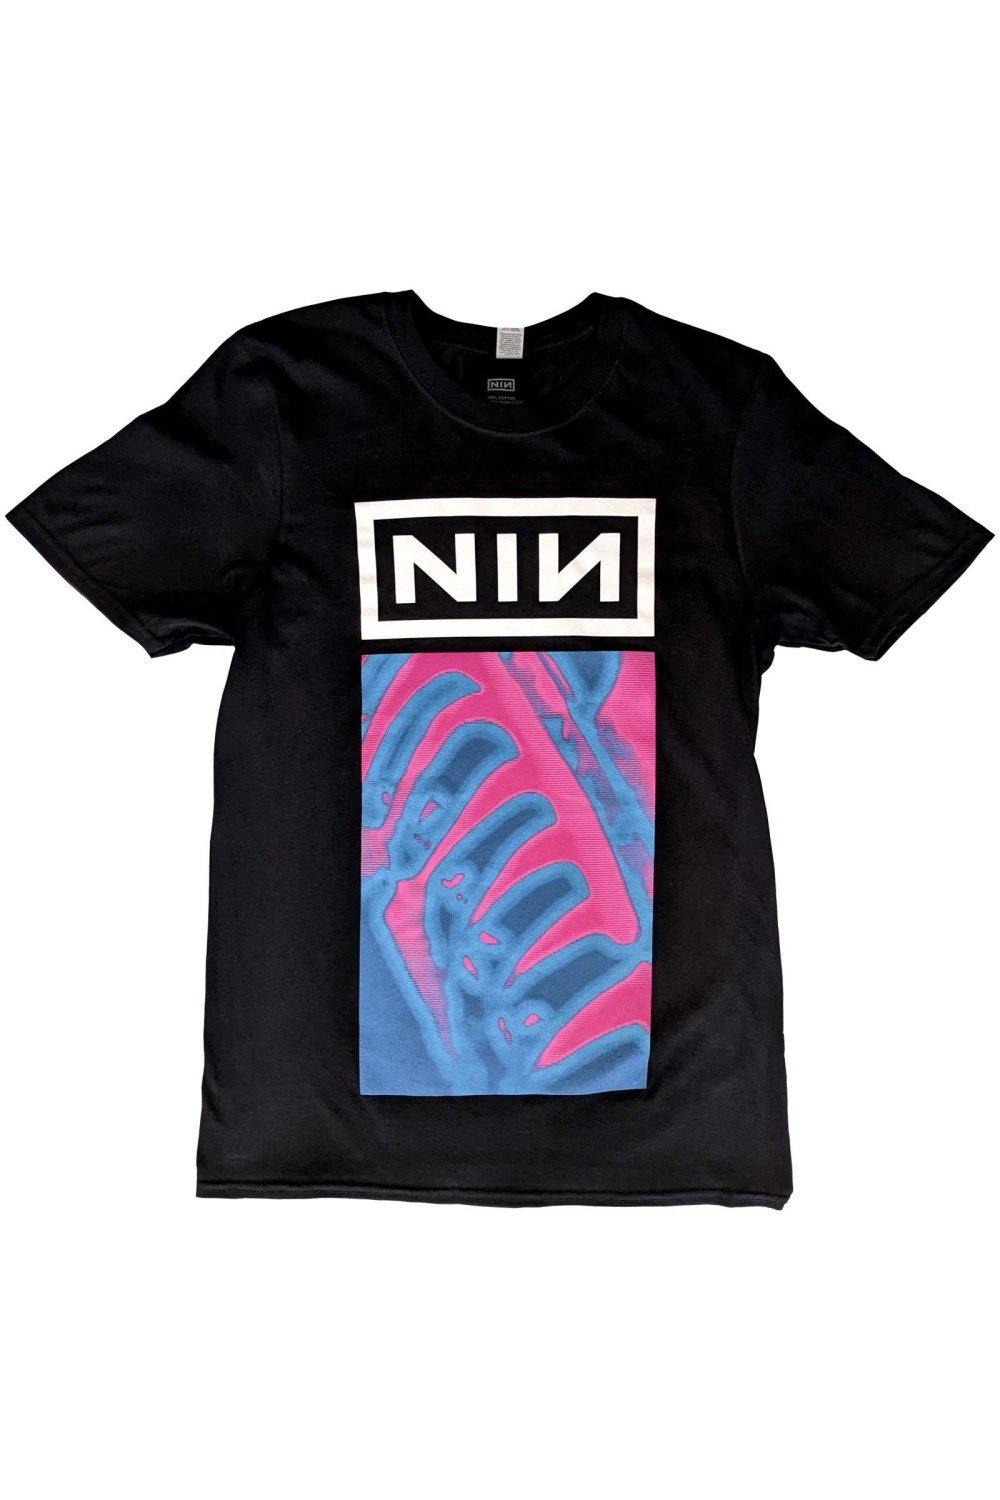 Неоновая хлопковая футболка Pretty Hate Machine Nine Inch Nails, черный